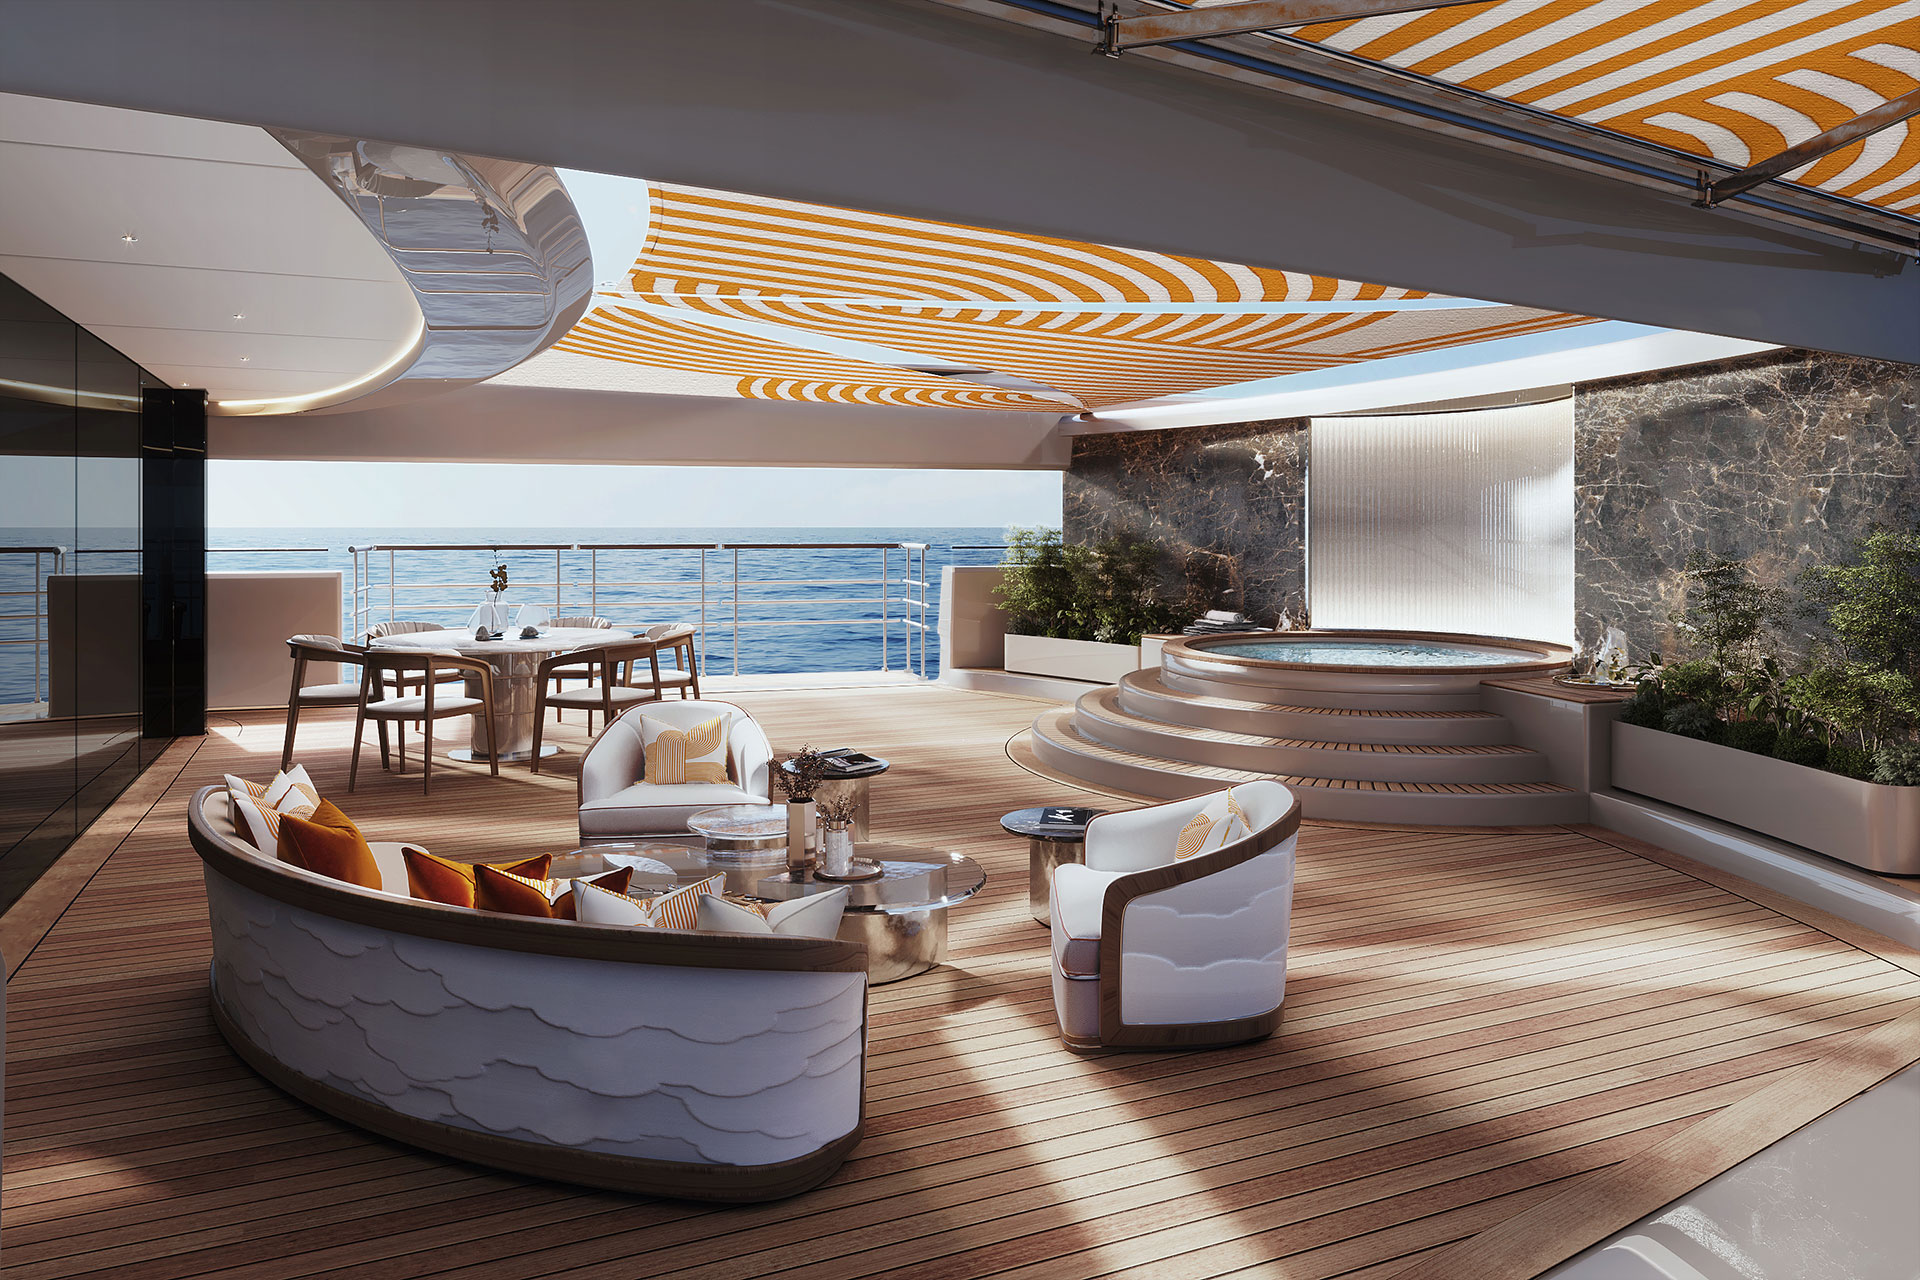 Kyriakos Mourtzouchos Technical Manager PrivatSea – A render of a luxurious superyacht deck